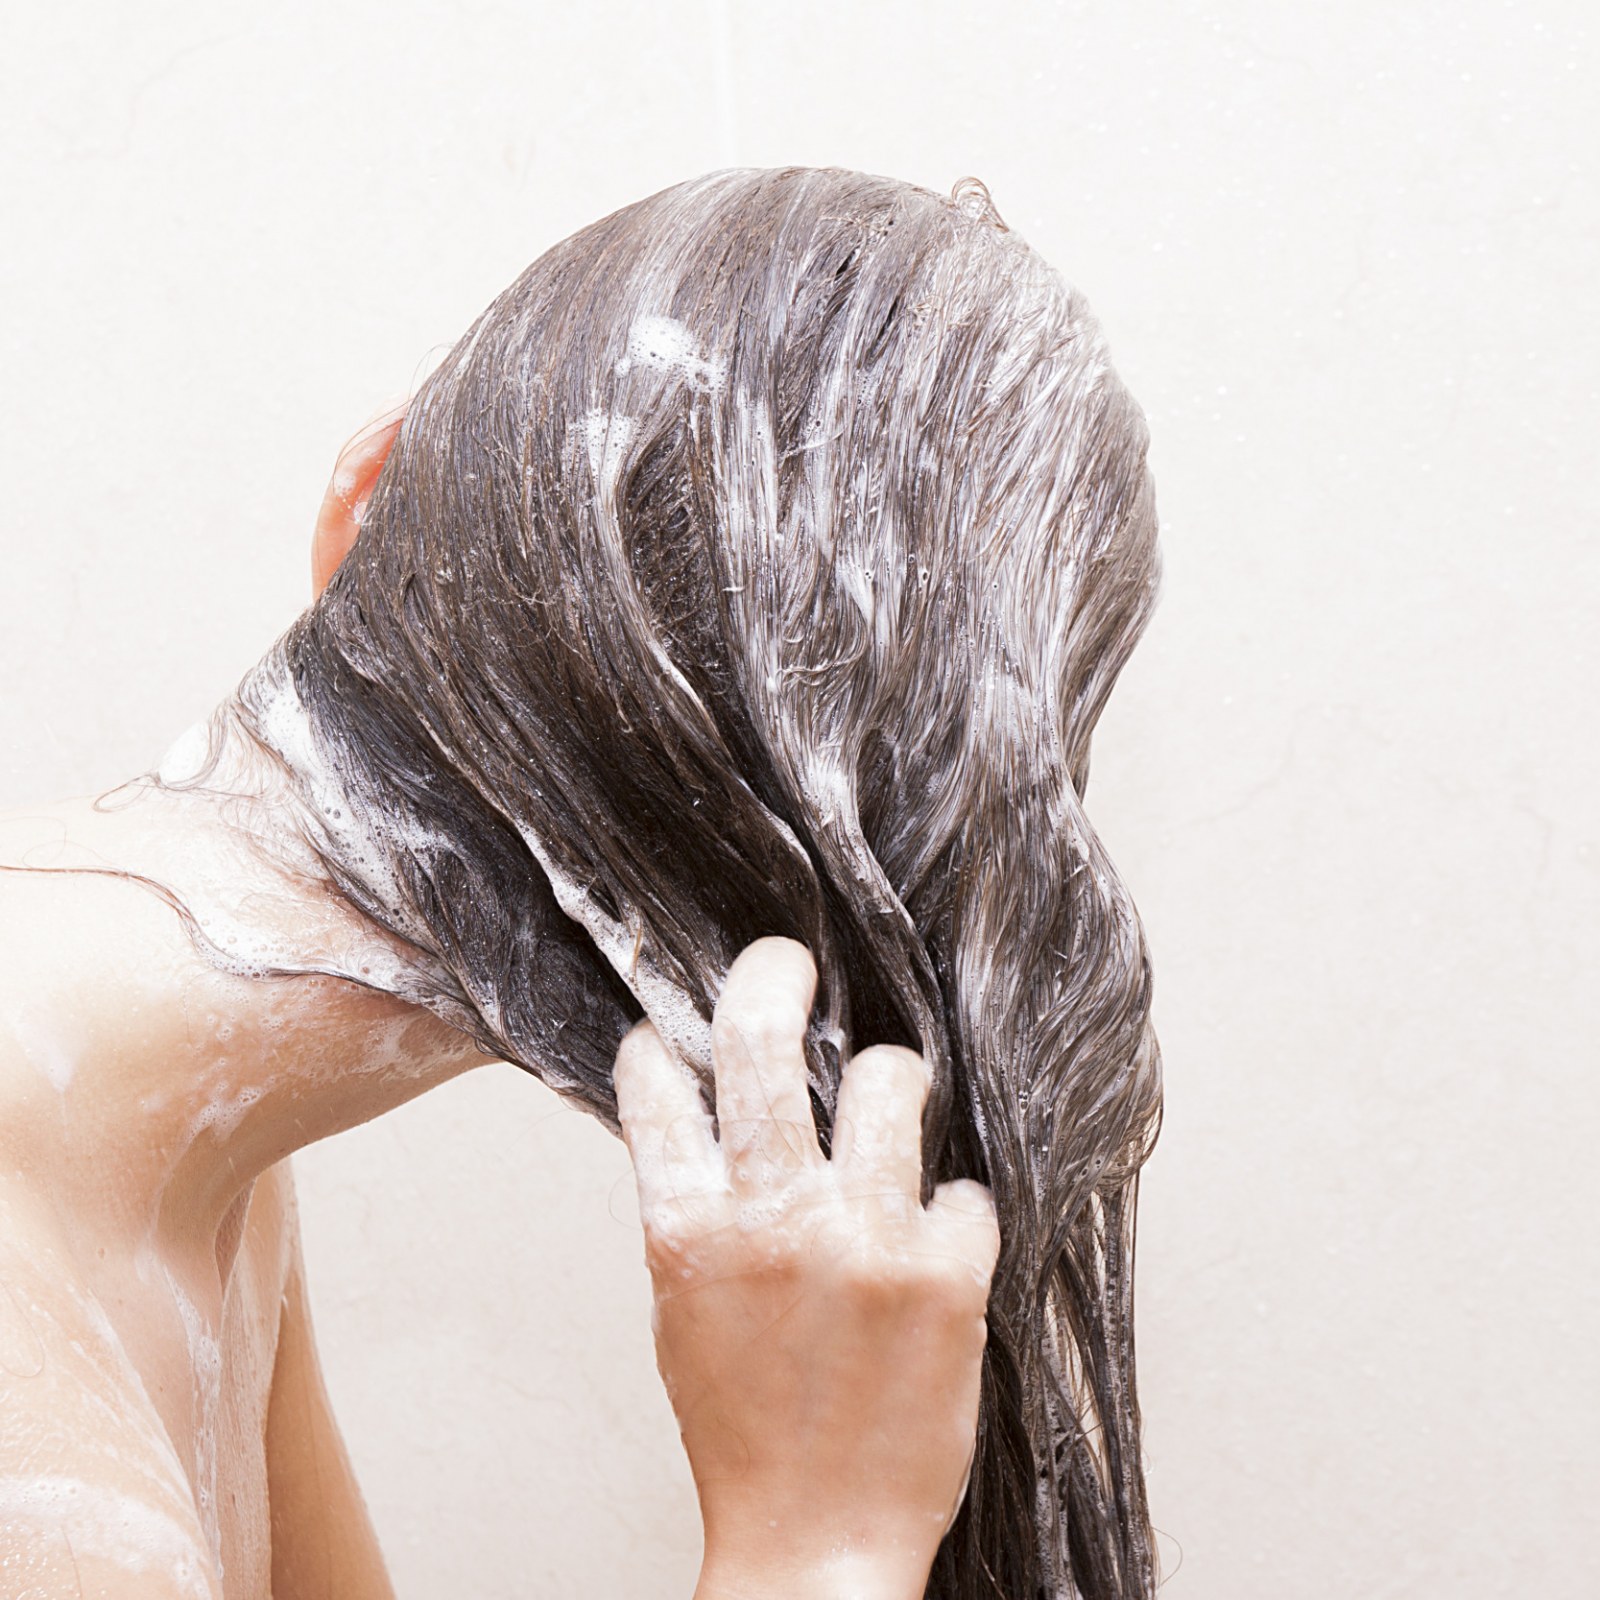 https://d.newsweek.com/en/full/1864347/women-shampooing-hair-shower.jpg?w=1600&h=1600&q=88&f=722876857339e3a03eeb43adb7ec3be5